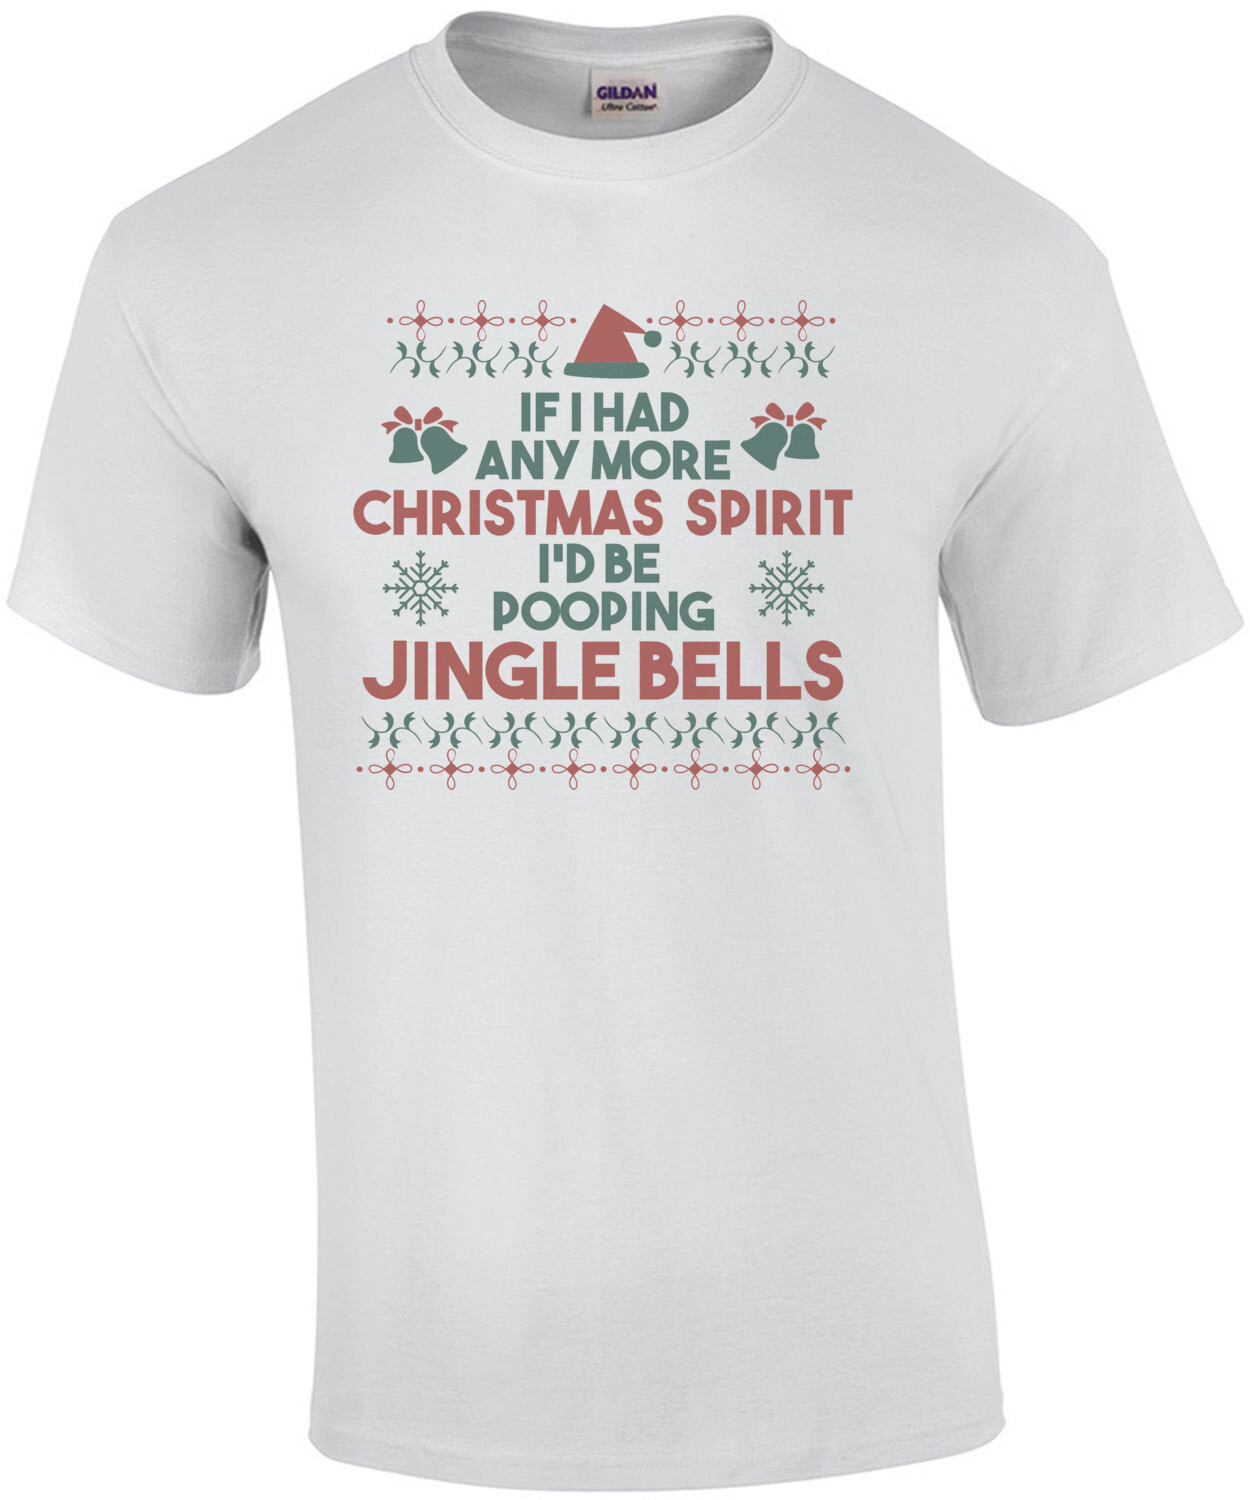 If I had any more Christmas Spirit I'd be pooping jingle bells - funny christmas t-shirt